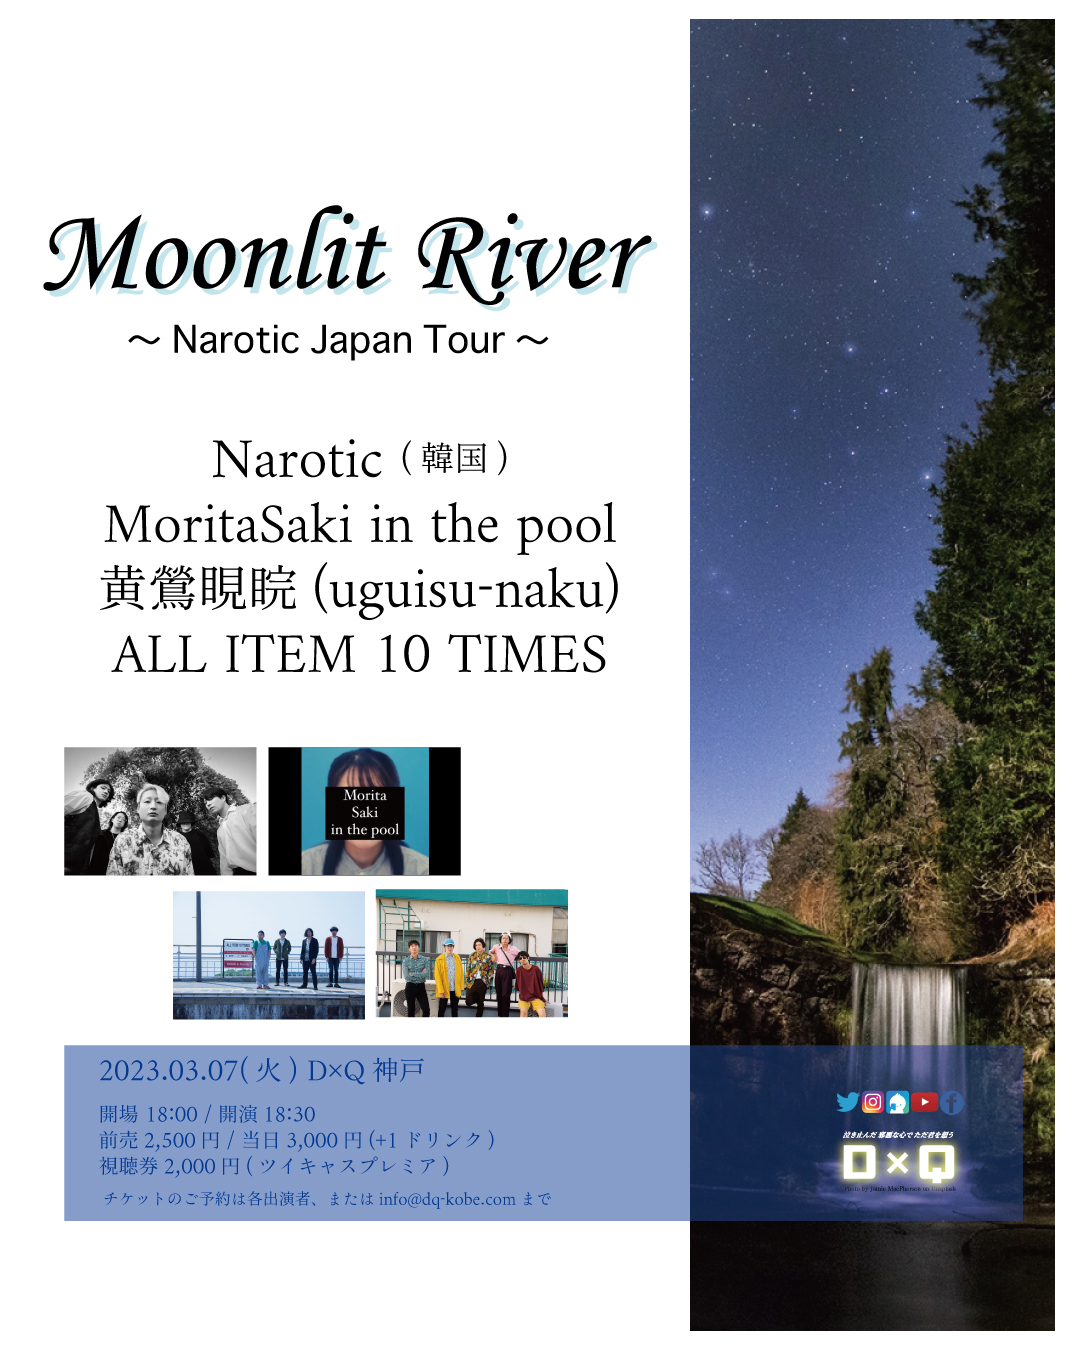 「Moonlit River～Narotic Japan Tour～」